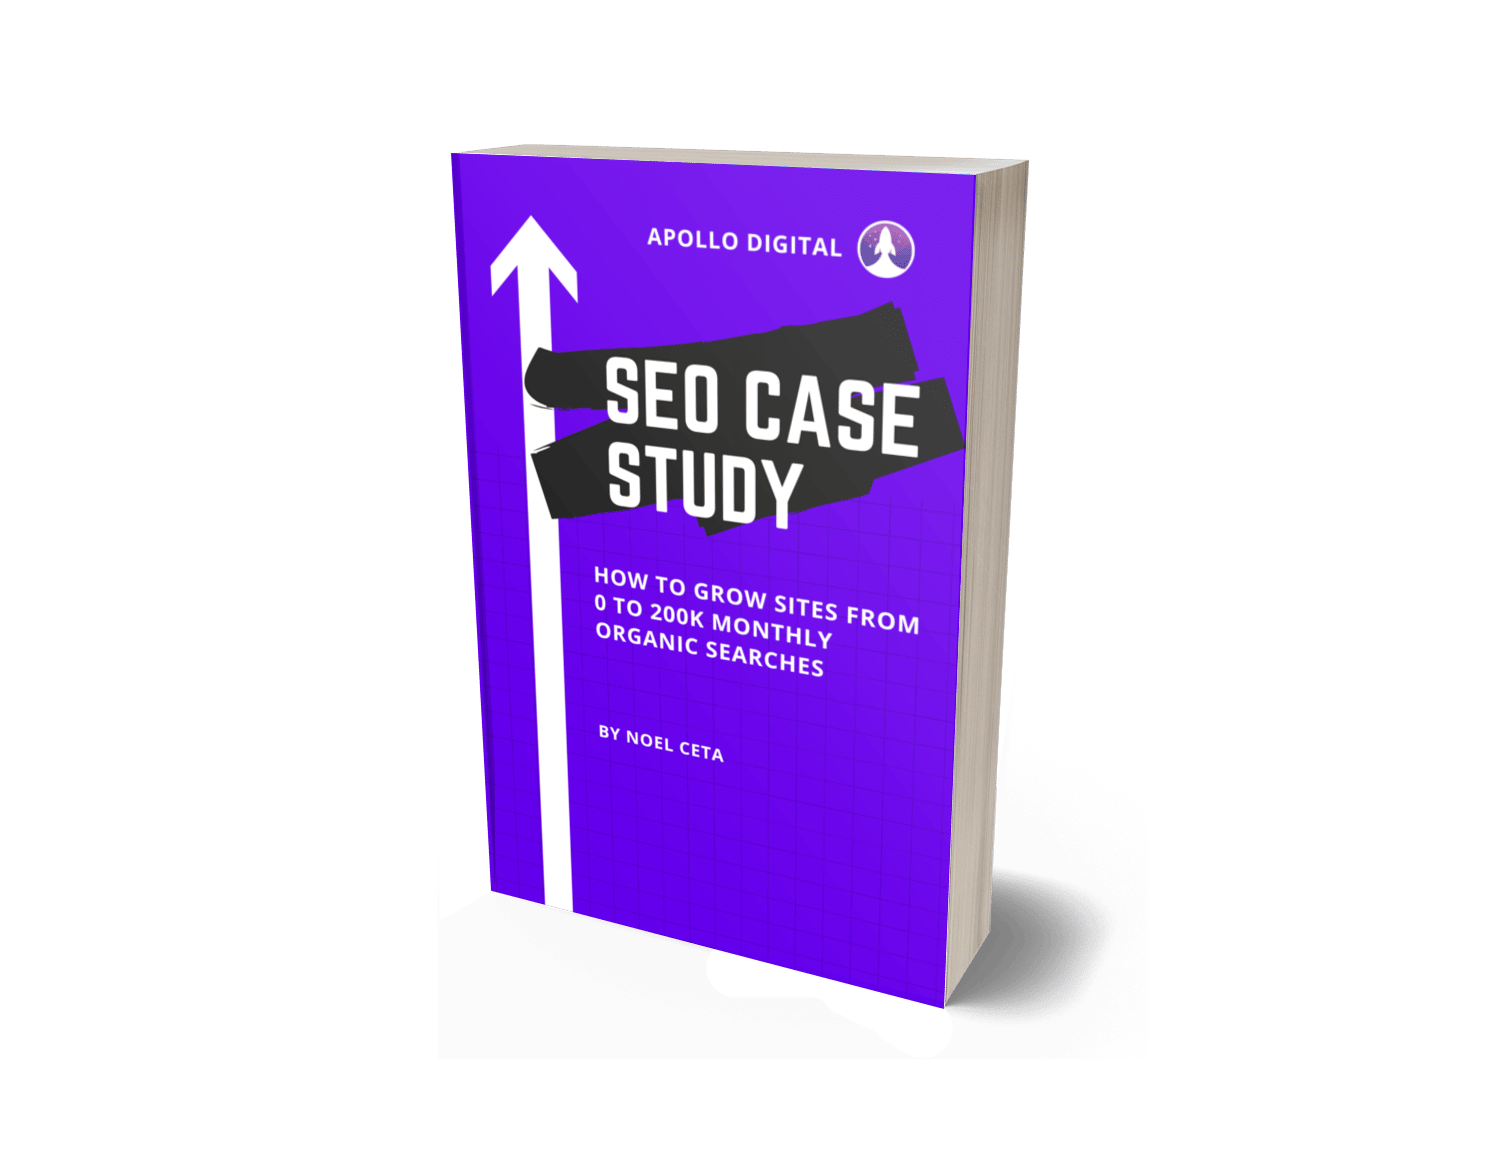 SEO Case Study PDF by Apollo Digital